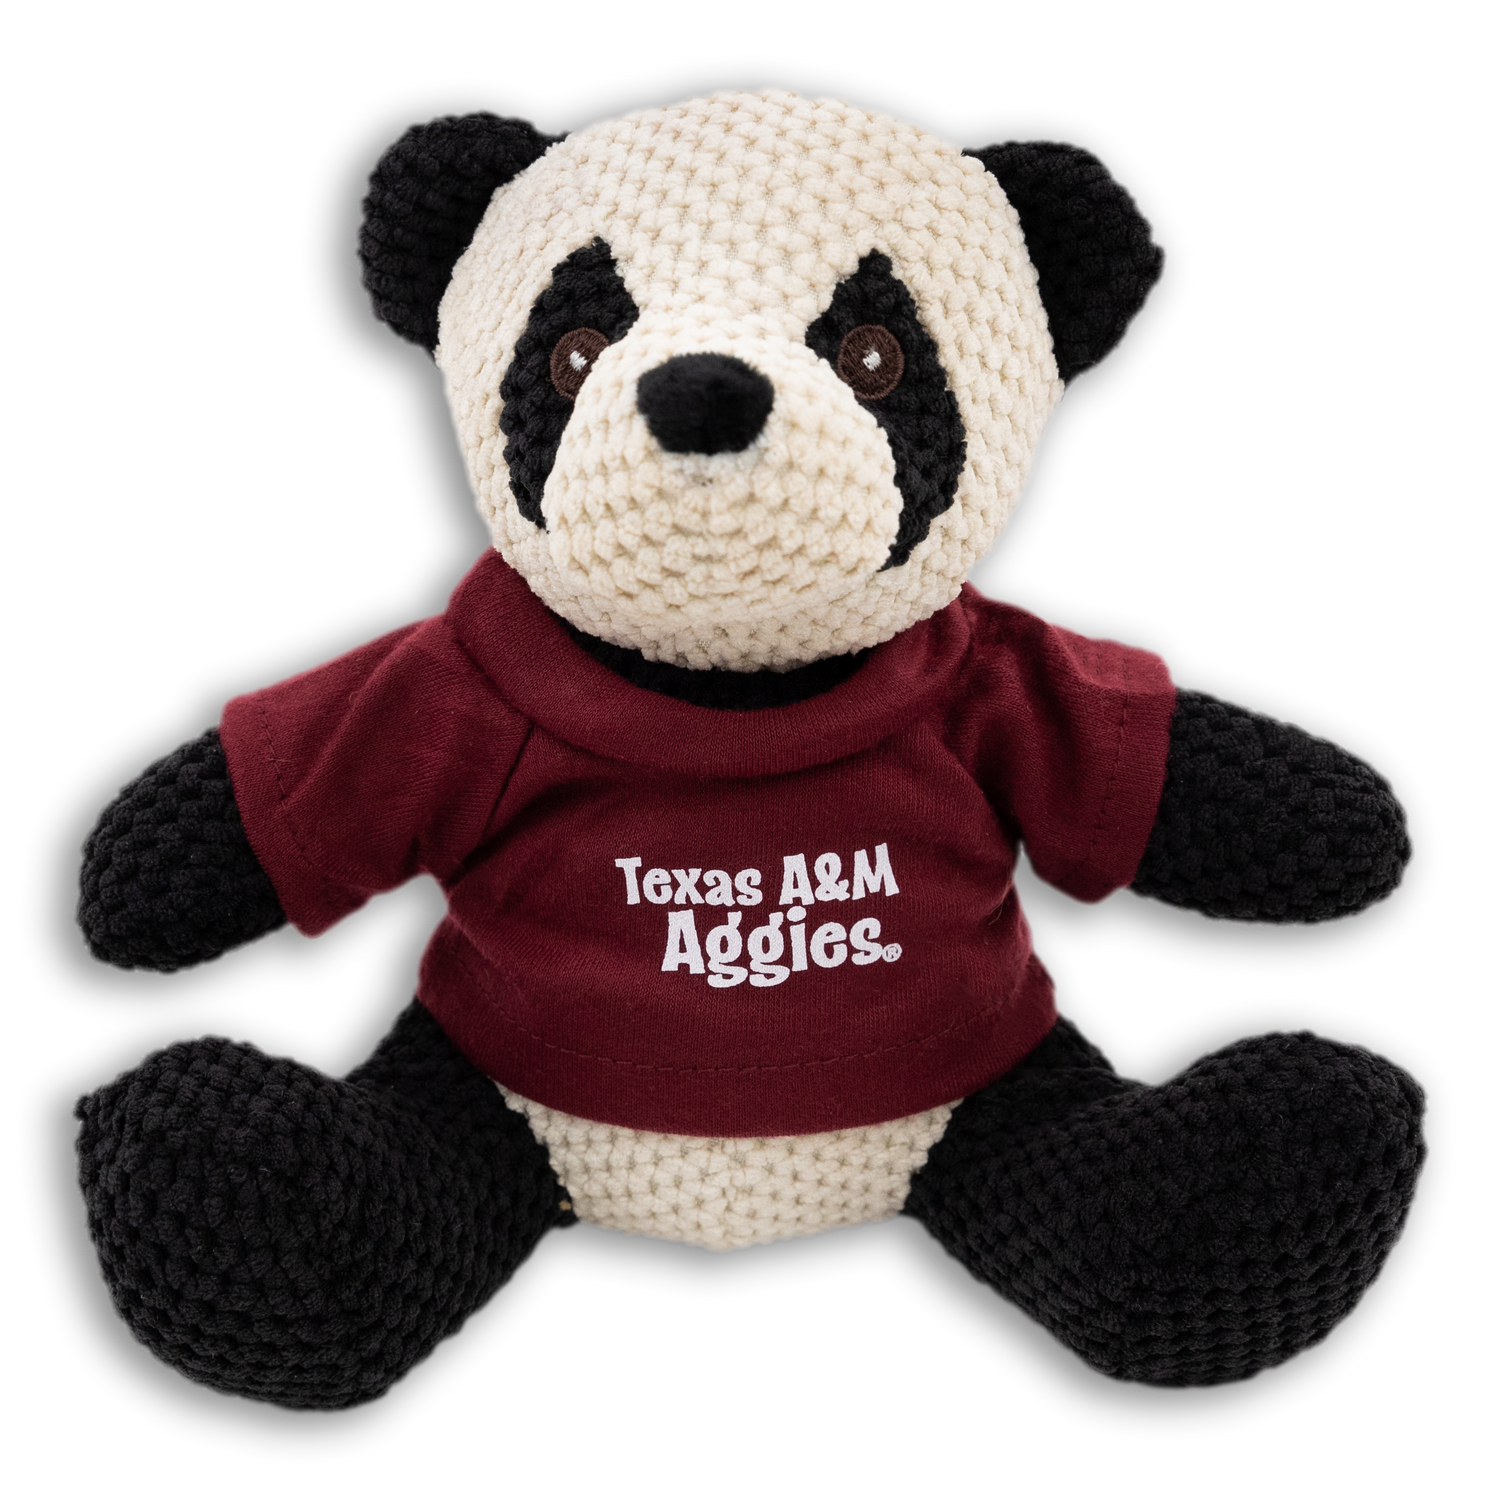 Texas A&M Aggies Textured Panda Toy